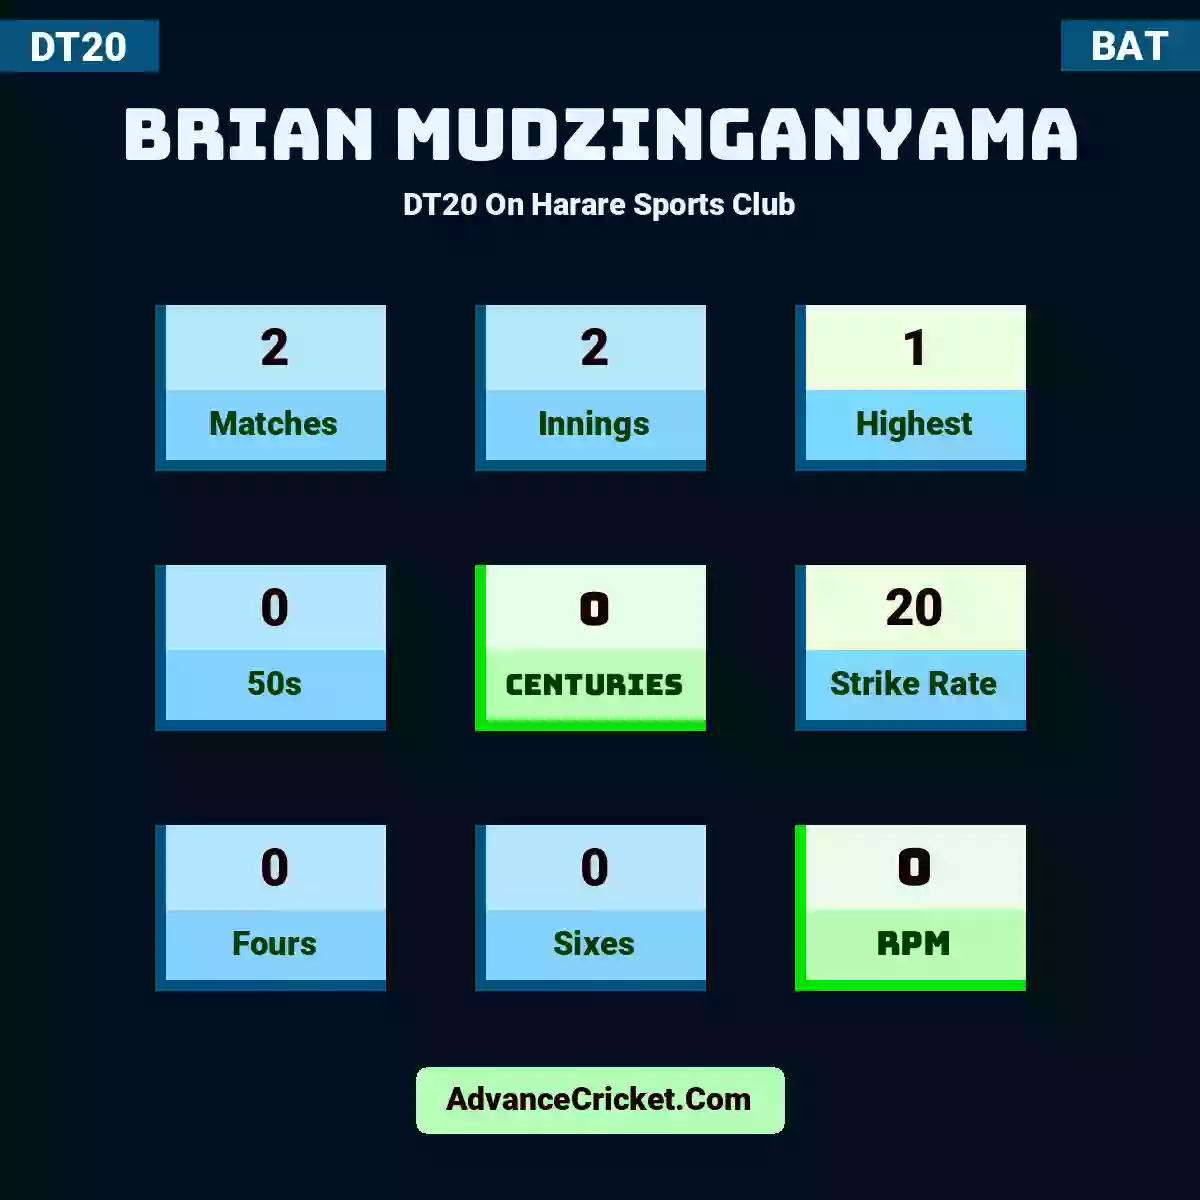 Brian Mudzinganyama DT20  On Harare Sports Club, Brian Mudzinganyama played 2 matches, scored 1 runs as highest, 0 half-centuries, and 0 centuries, with a strike rate of 20. B.Mudzinganyama hit 0 fours and 0 sixes, with an RPM of 0.